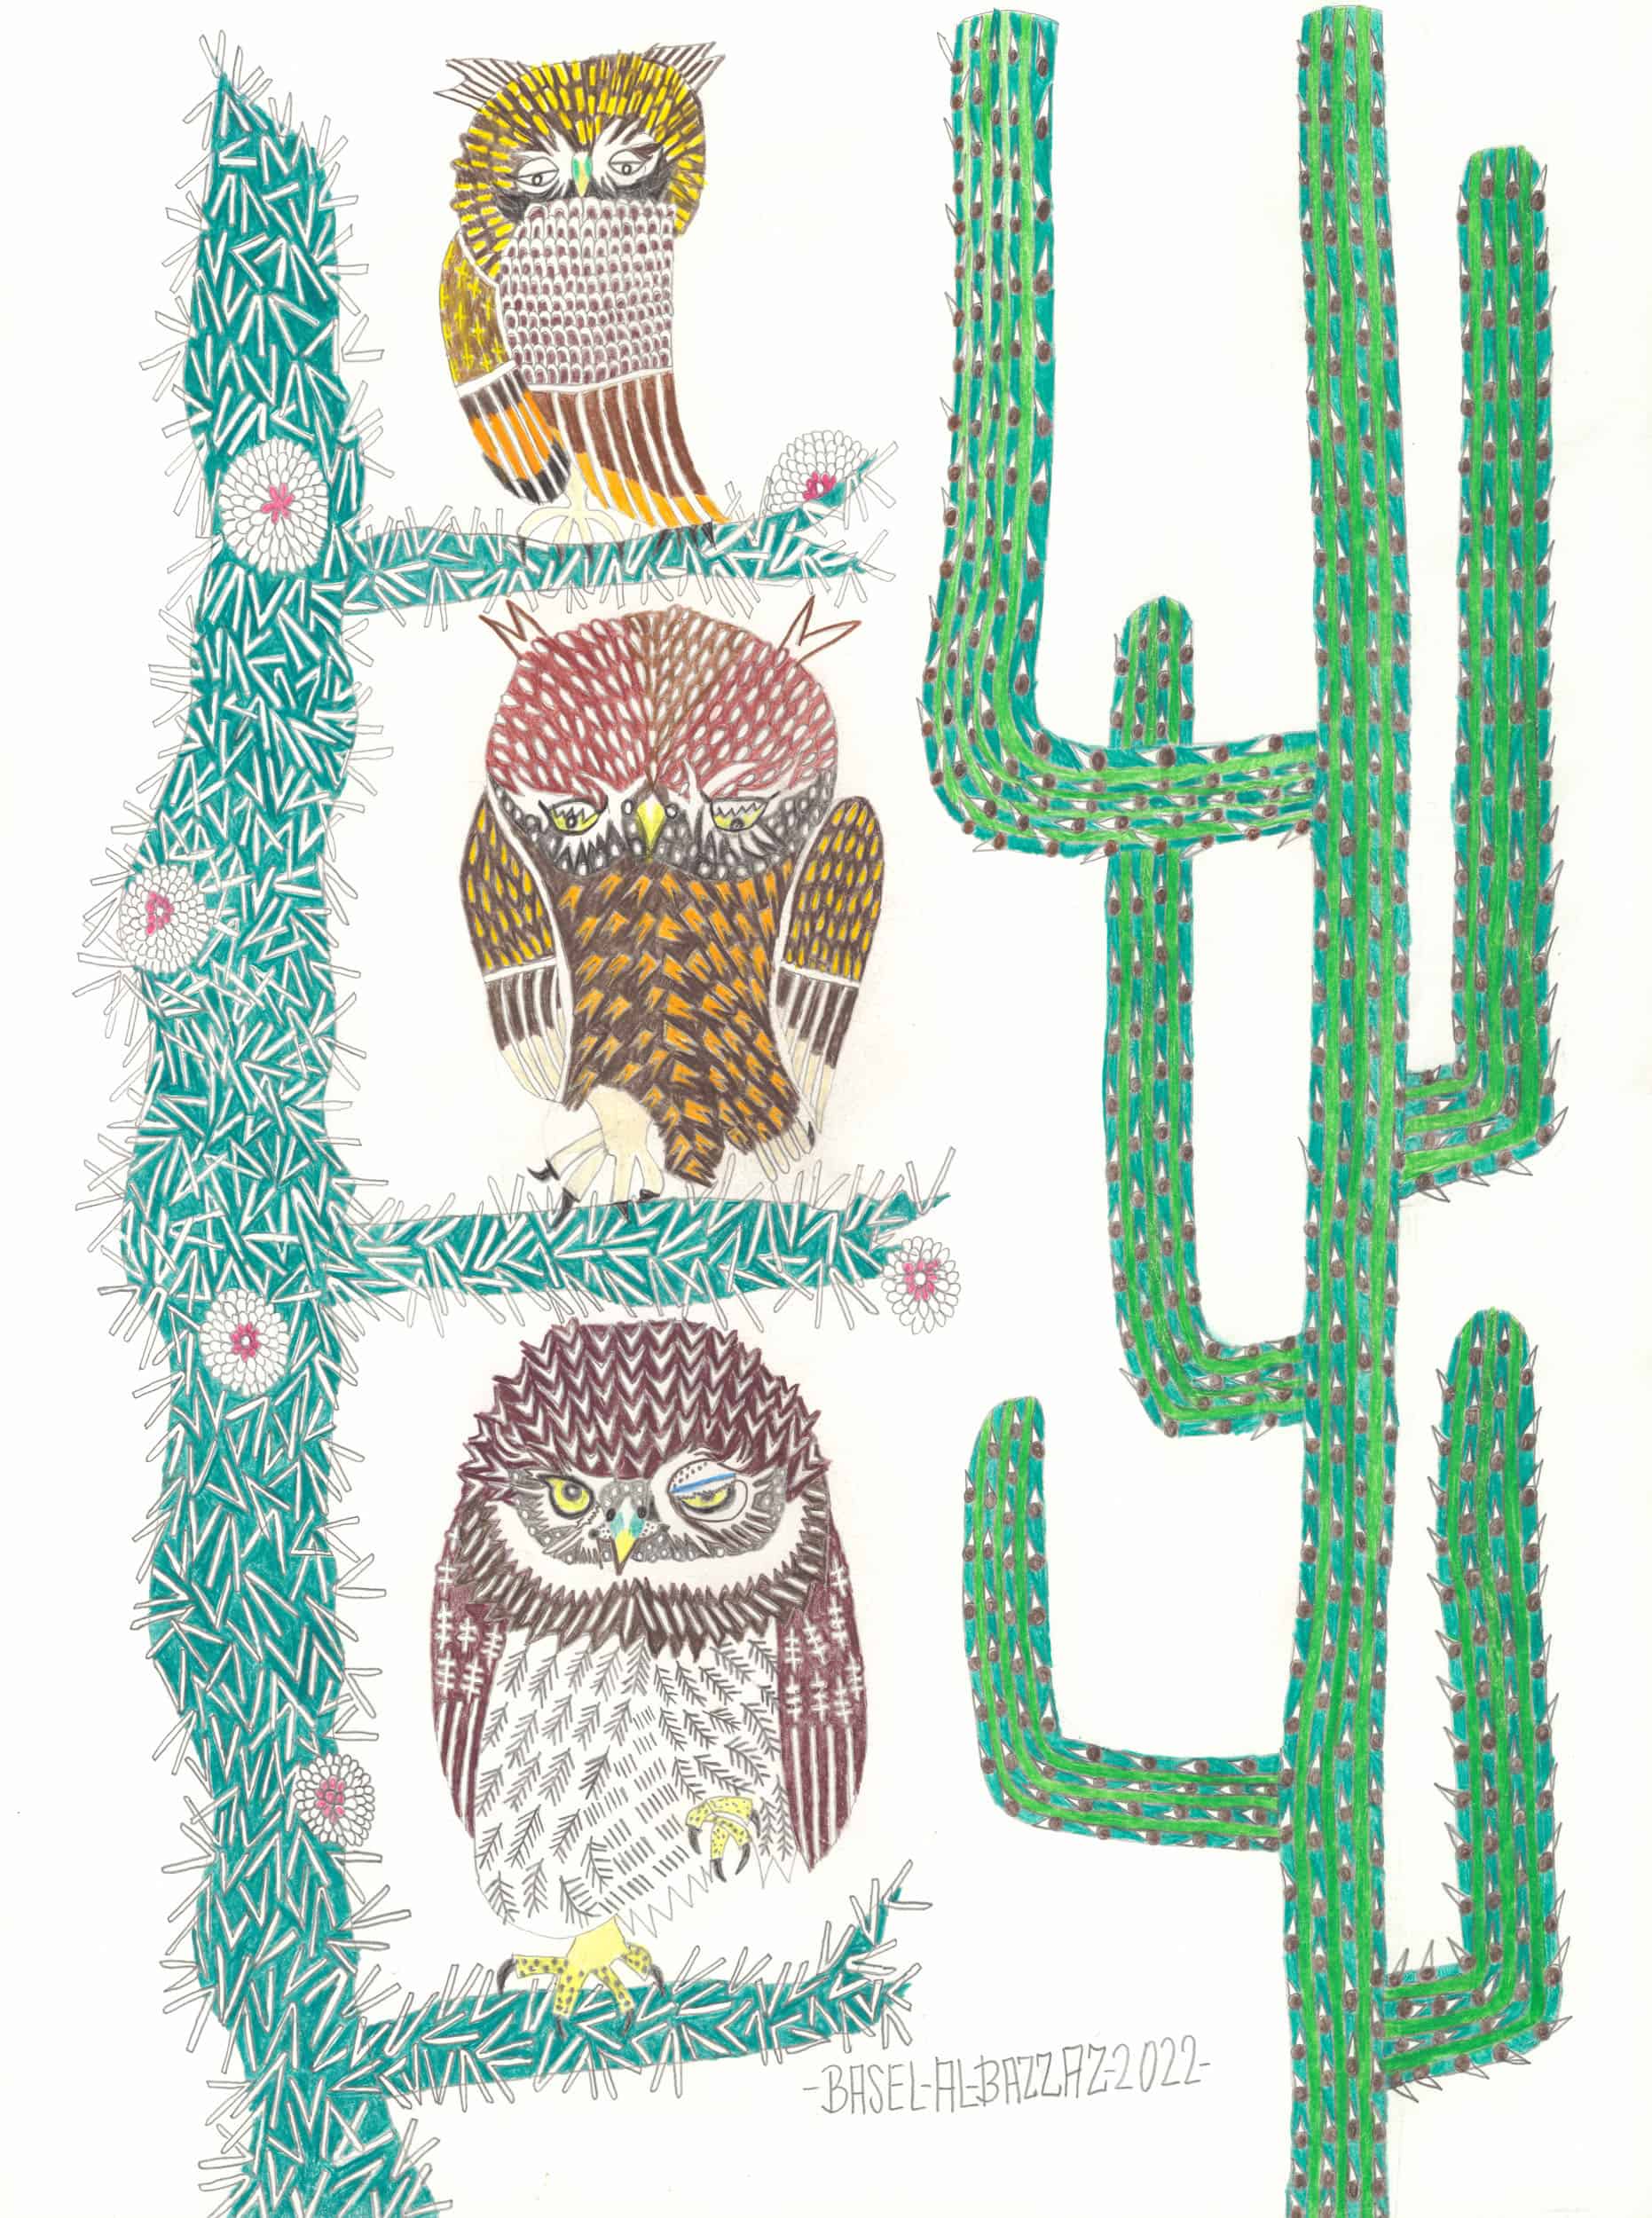 al-bazzaz basel - Eule von Mexiko / Owl of Mexico